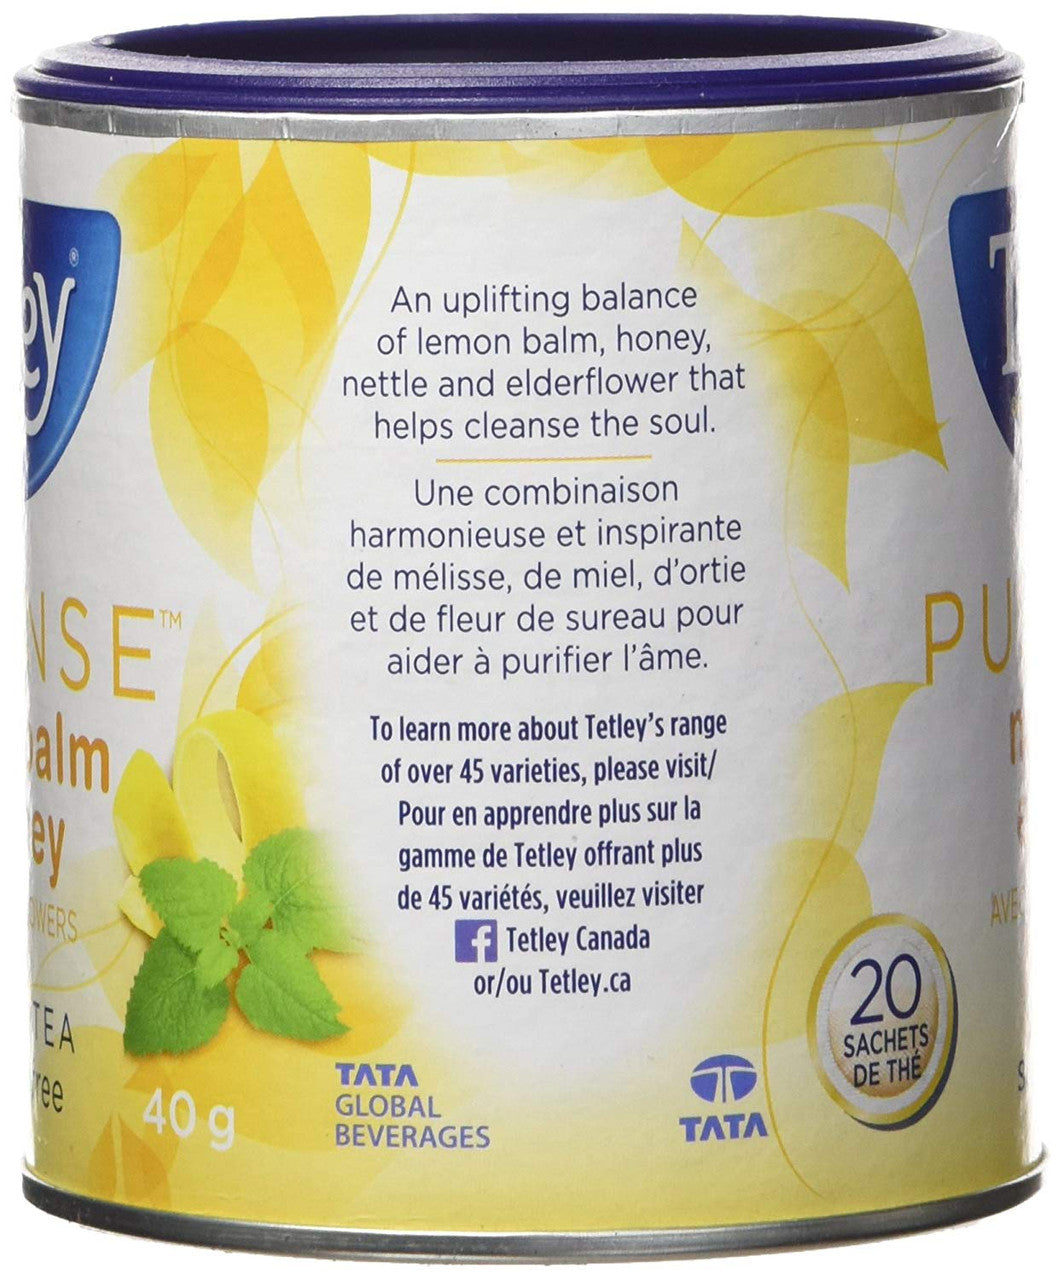 Tetley Tea Cleanse (Lemon Balm and Honey) Herbal Tea, 20ct, 40g/1.4oz. (Imported from Canada)